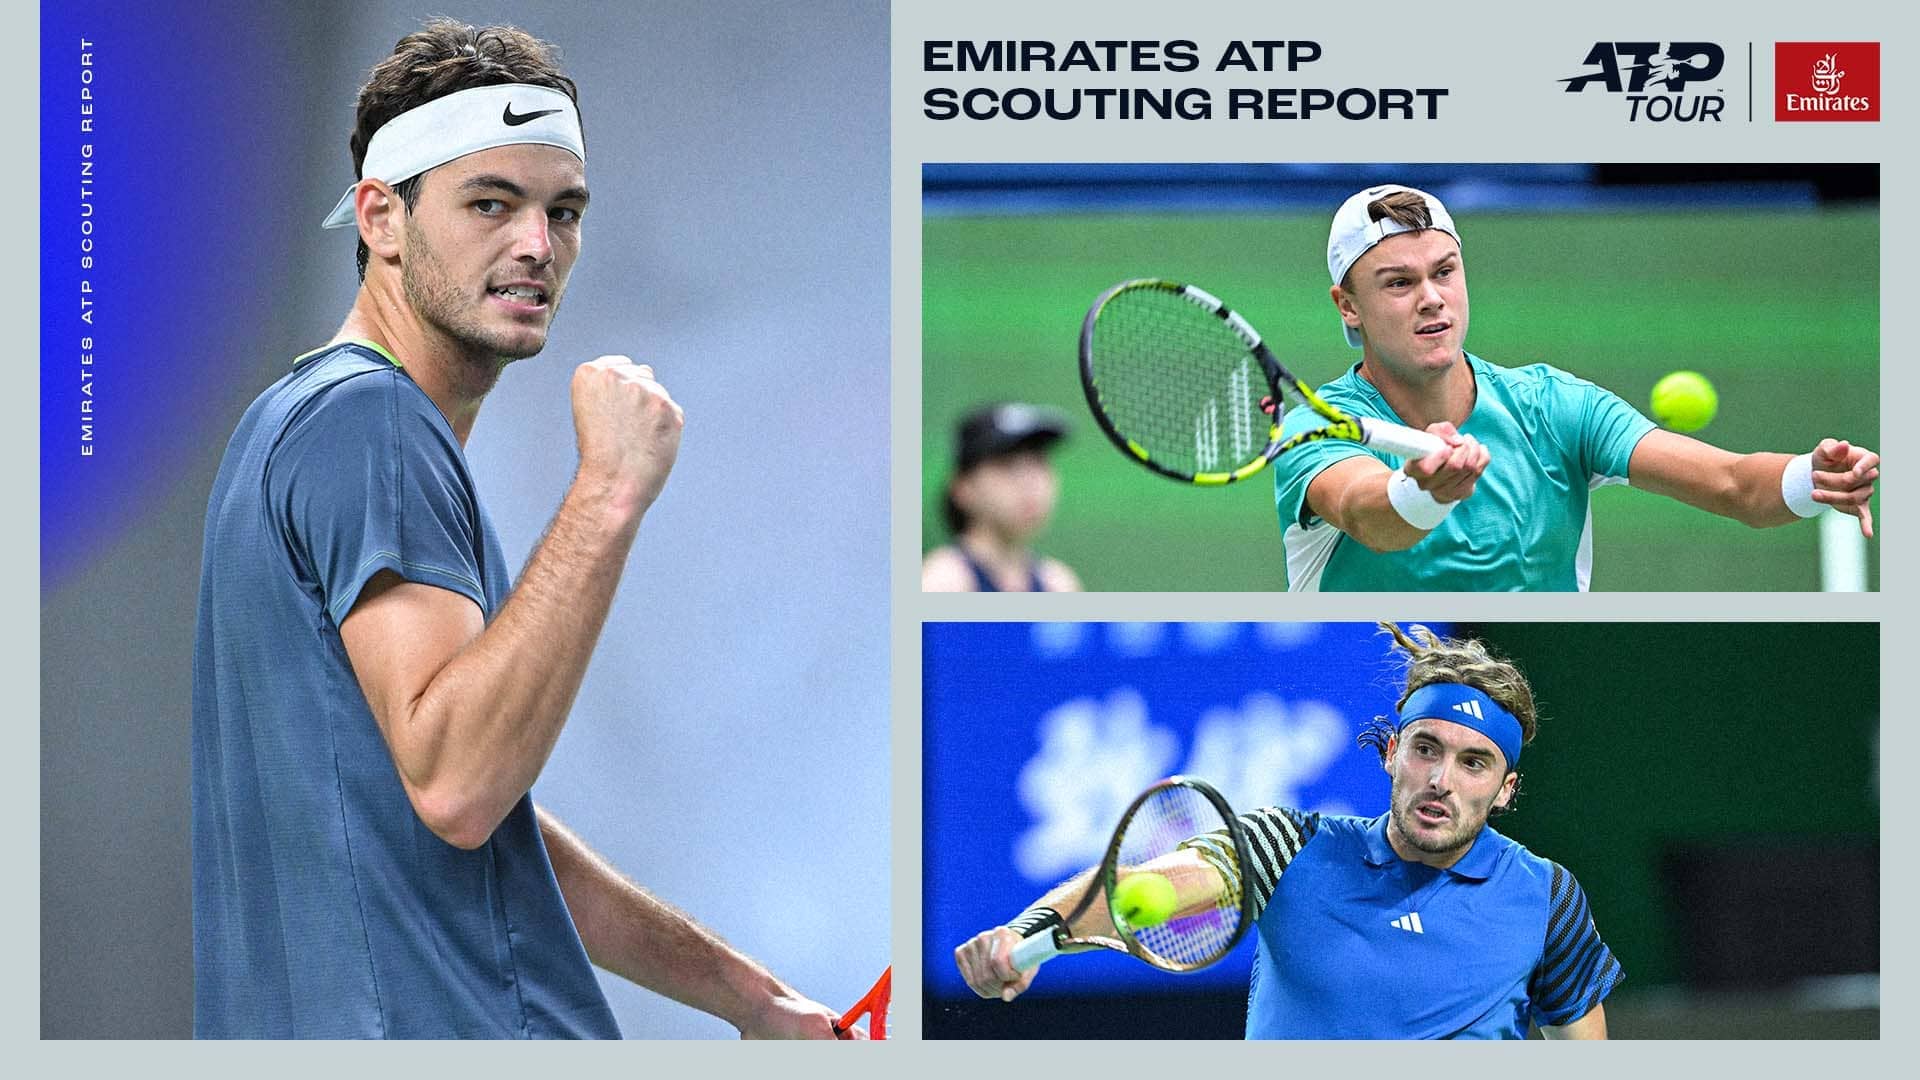 Live Tennis Rankings  Pepperstone ATP Live Rankings (Singles